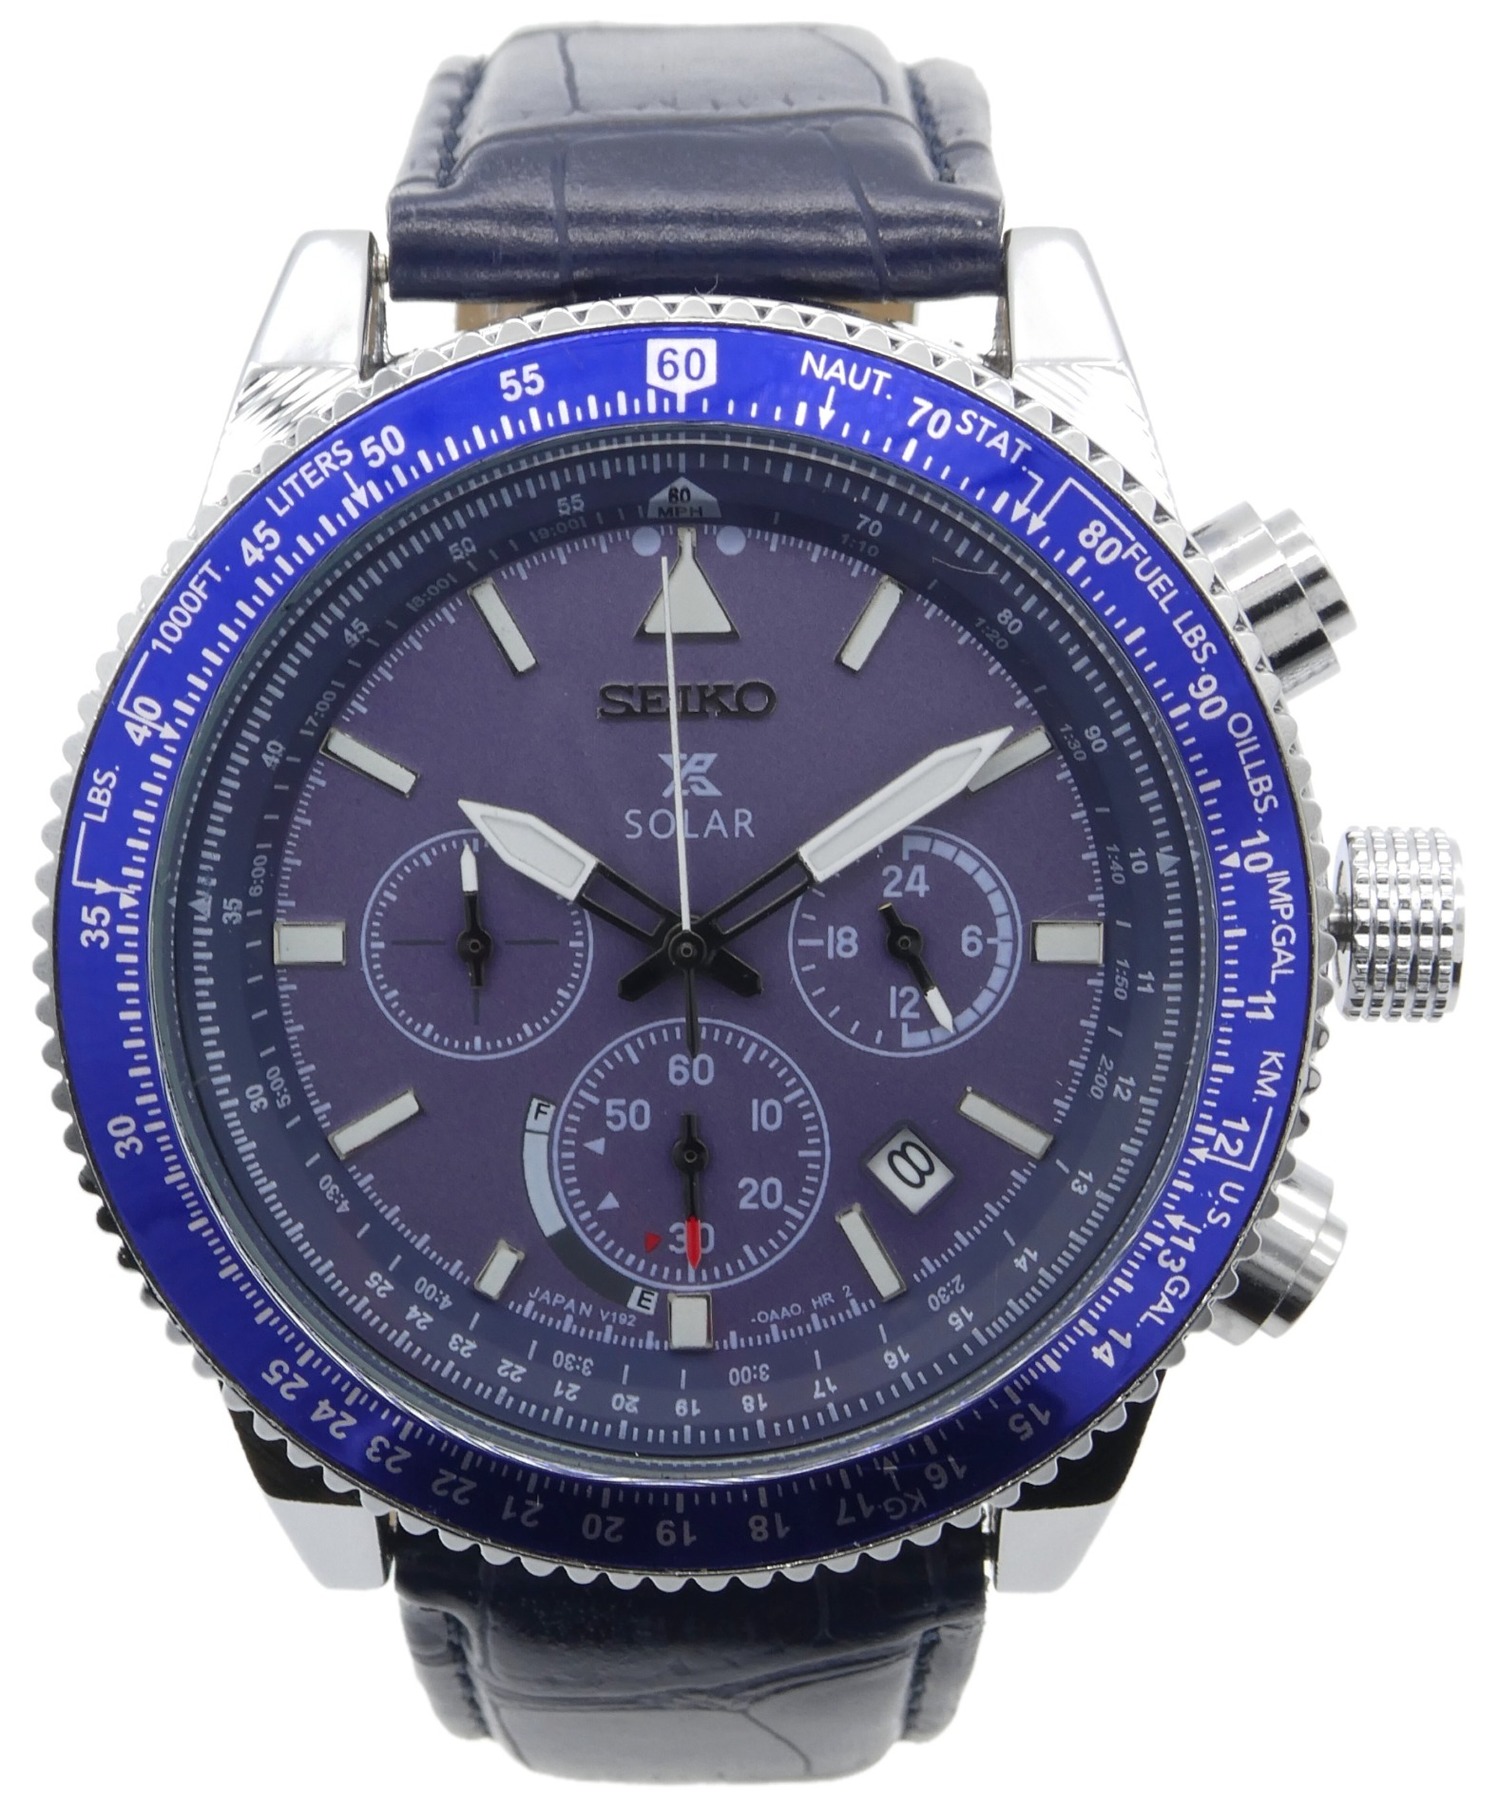 SEIKO (セイコー) Prospex Sky パイロットウォッチ 腕時計 逆輸入品 サイズ:3.5cm